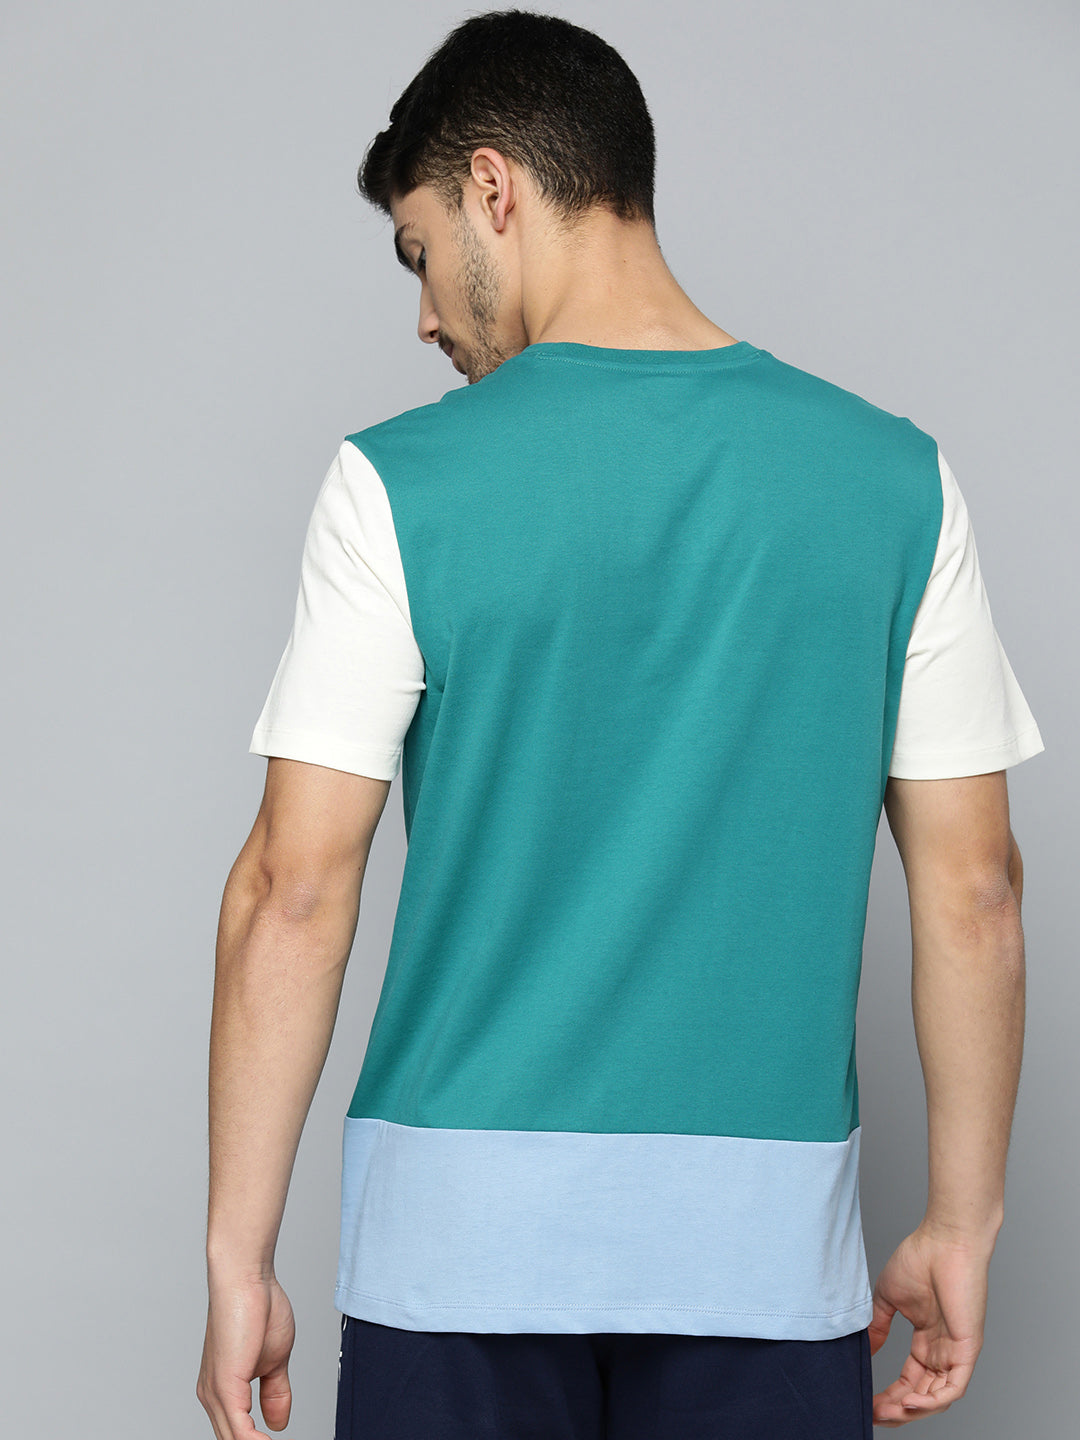 Alcis Men Colourblocked Anti Static Slim Fit Sports T-shirt